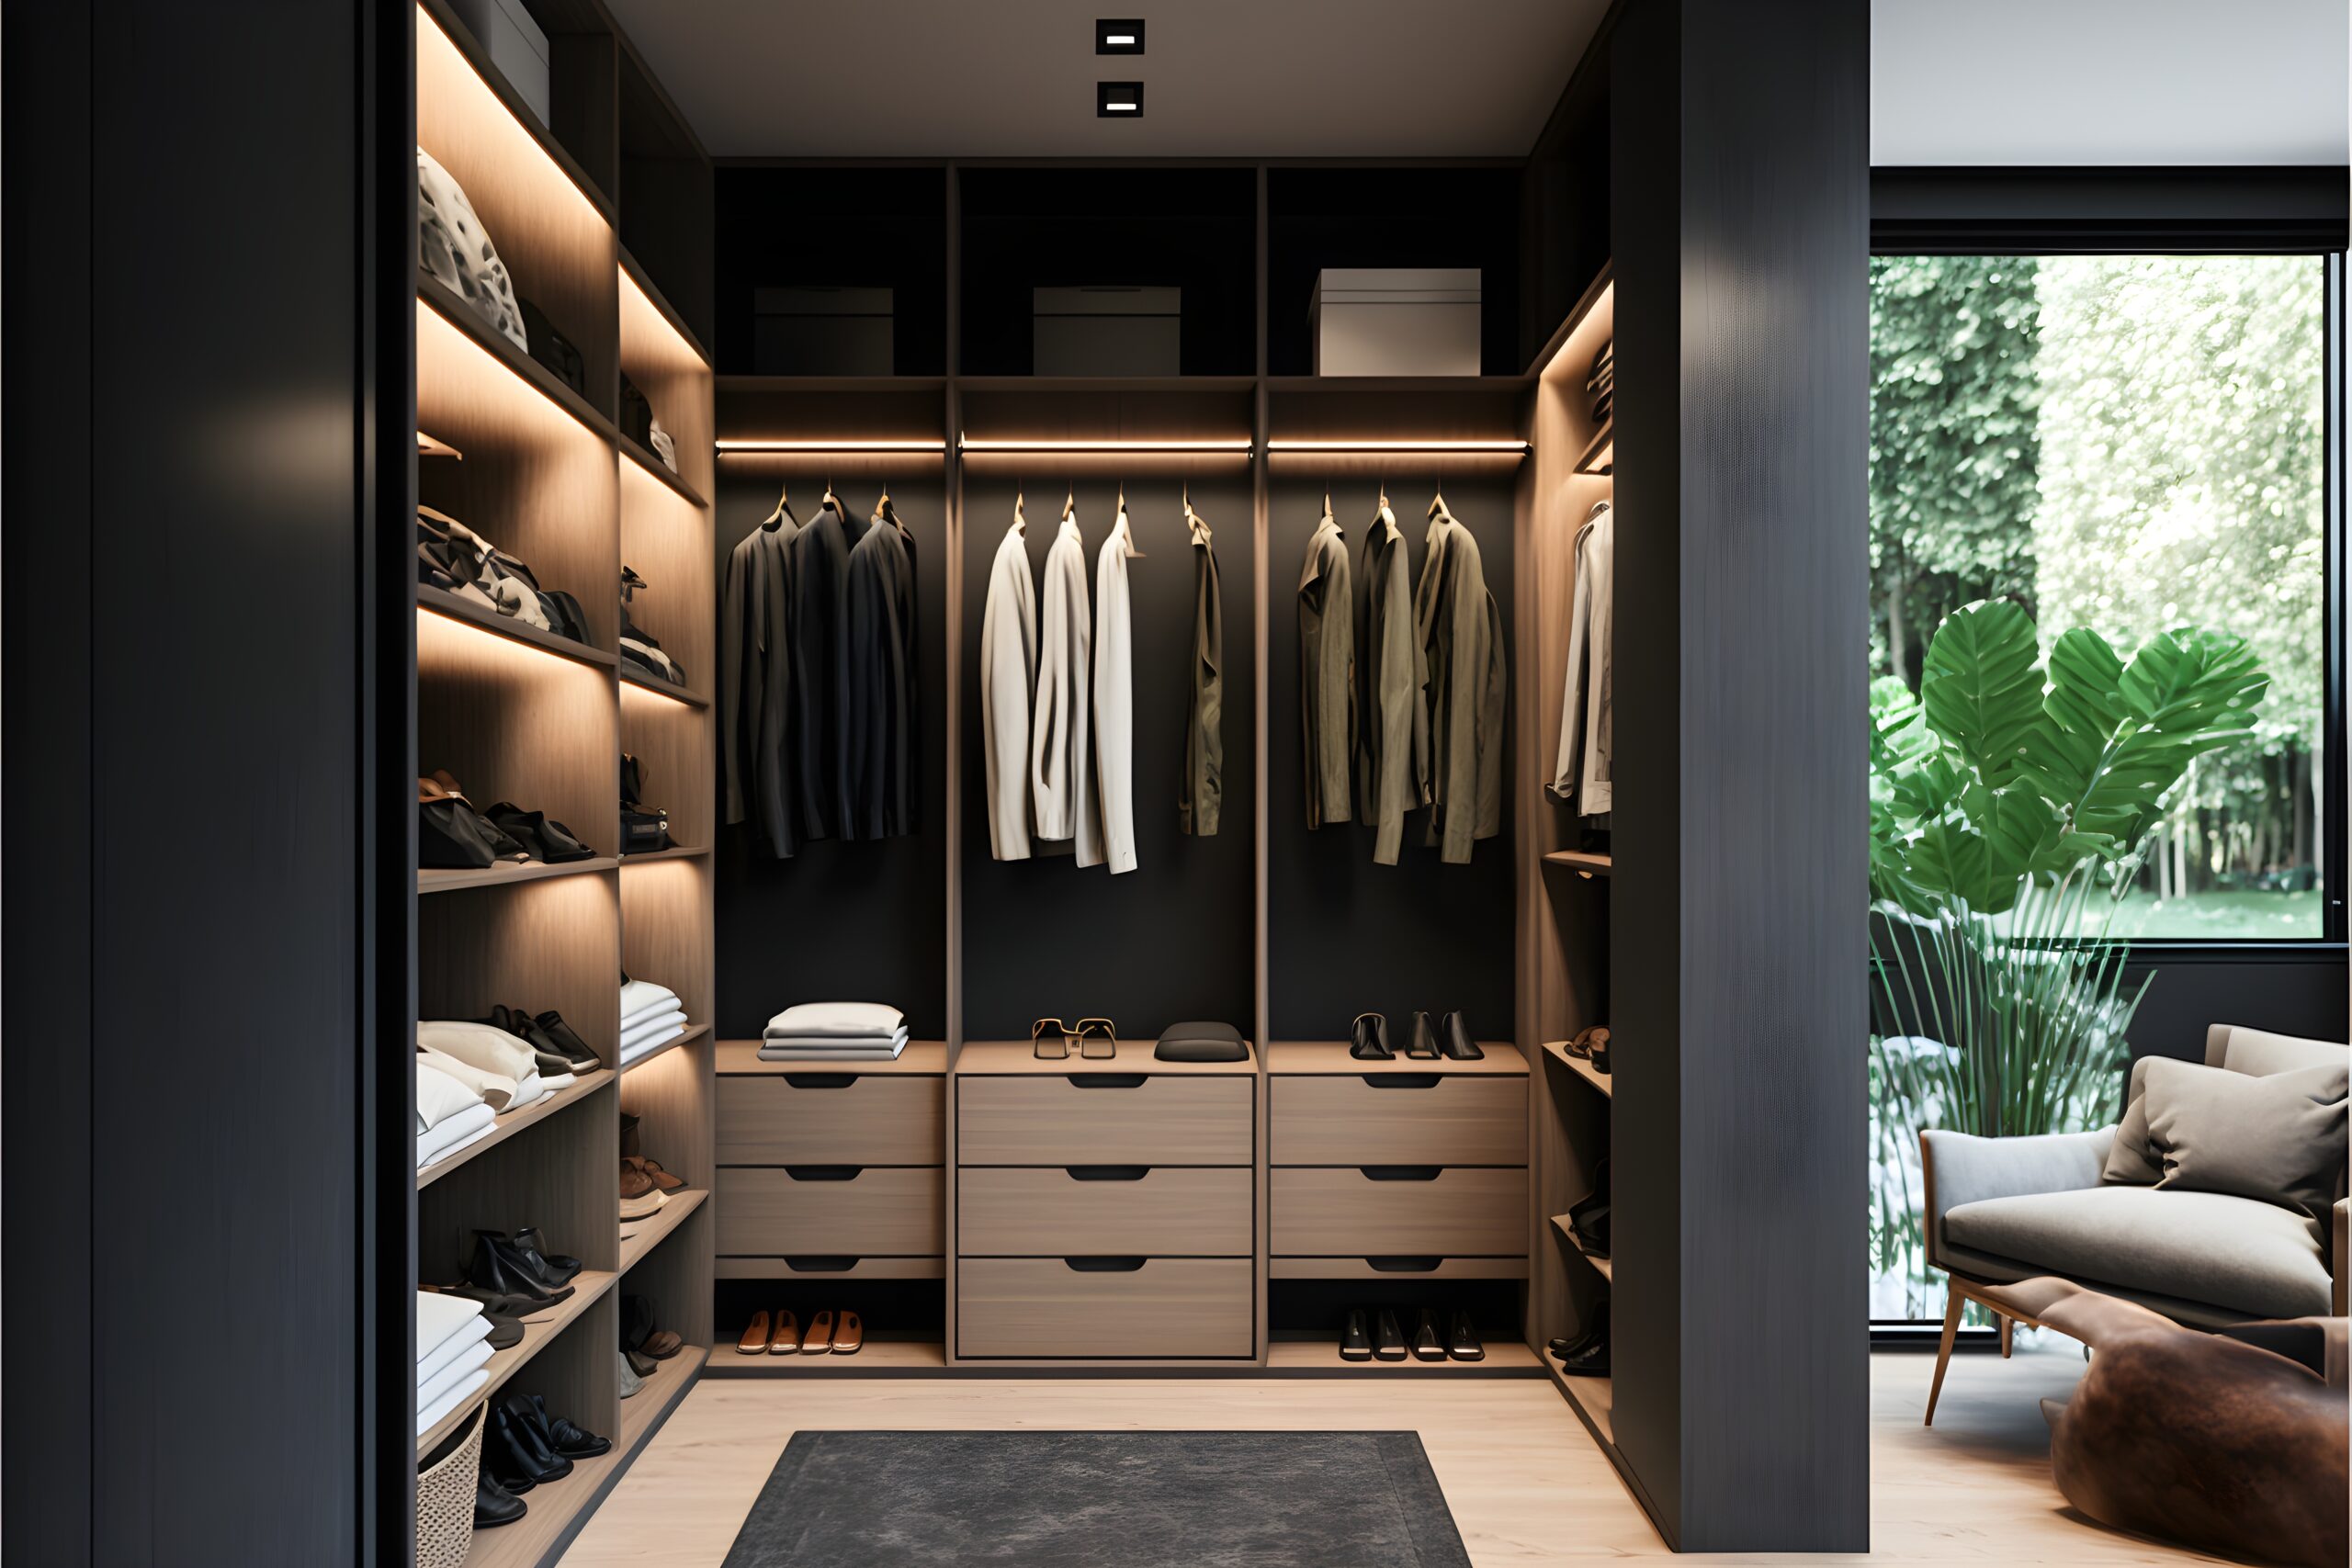 Organized walk in closet. walk-in closet organization concept image.